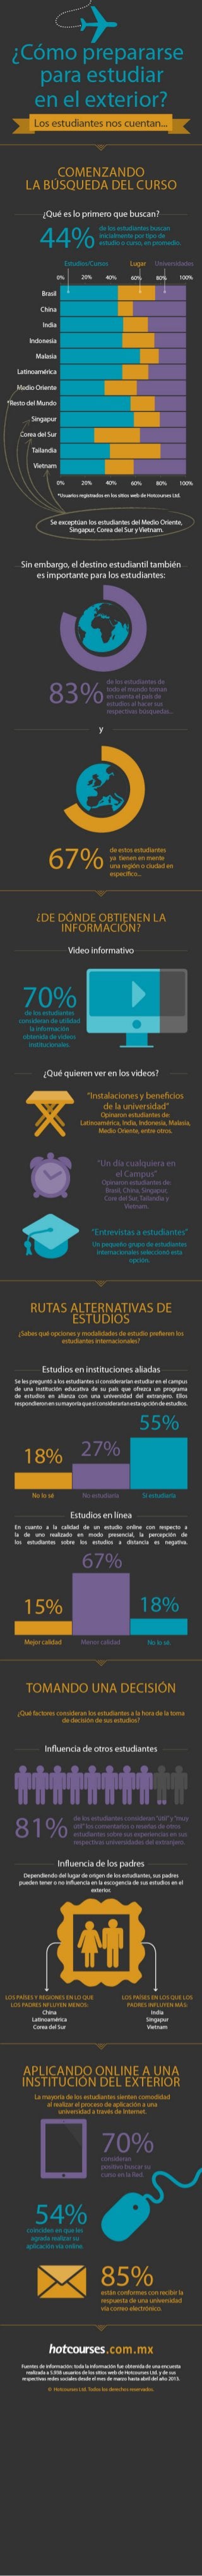 Infografia para-estudiantes-internacionales